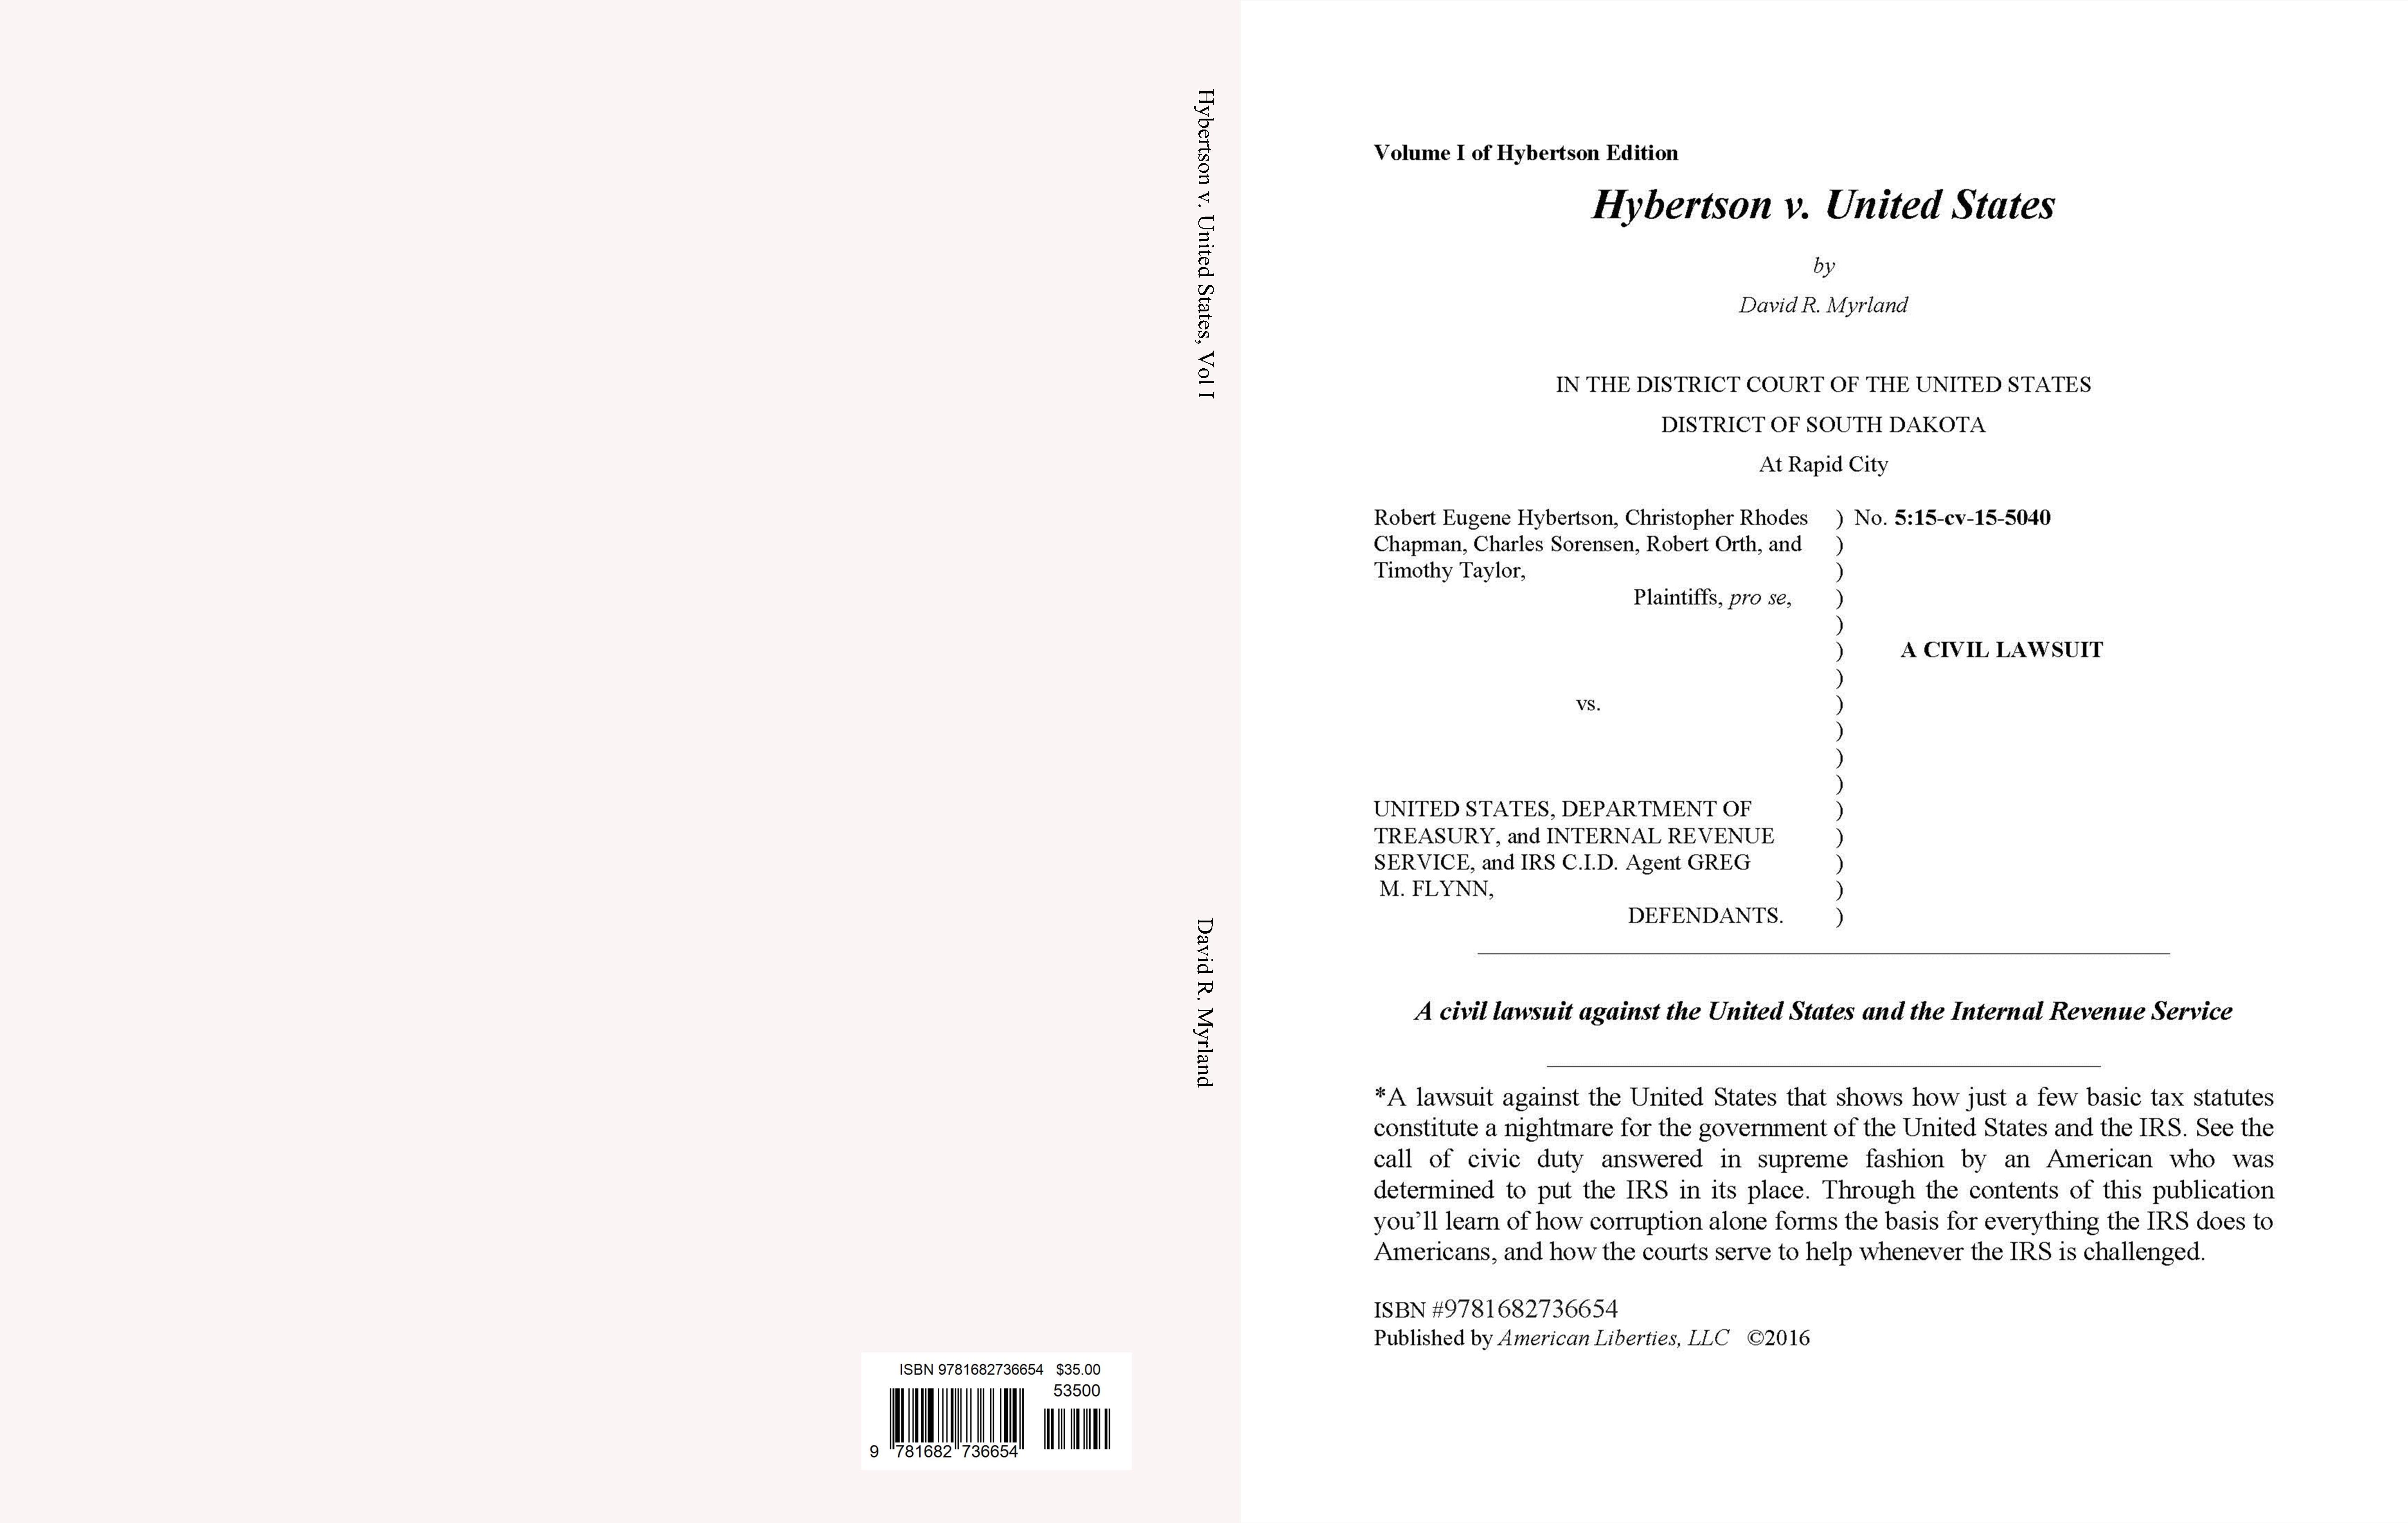 Hybertson v. United States, Vol I cover image